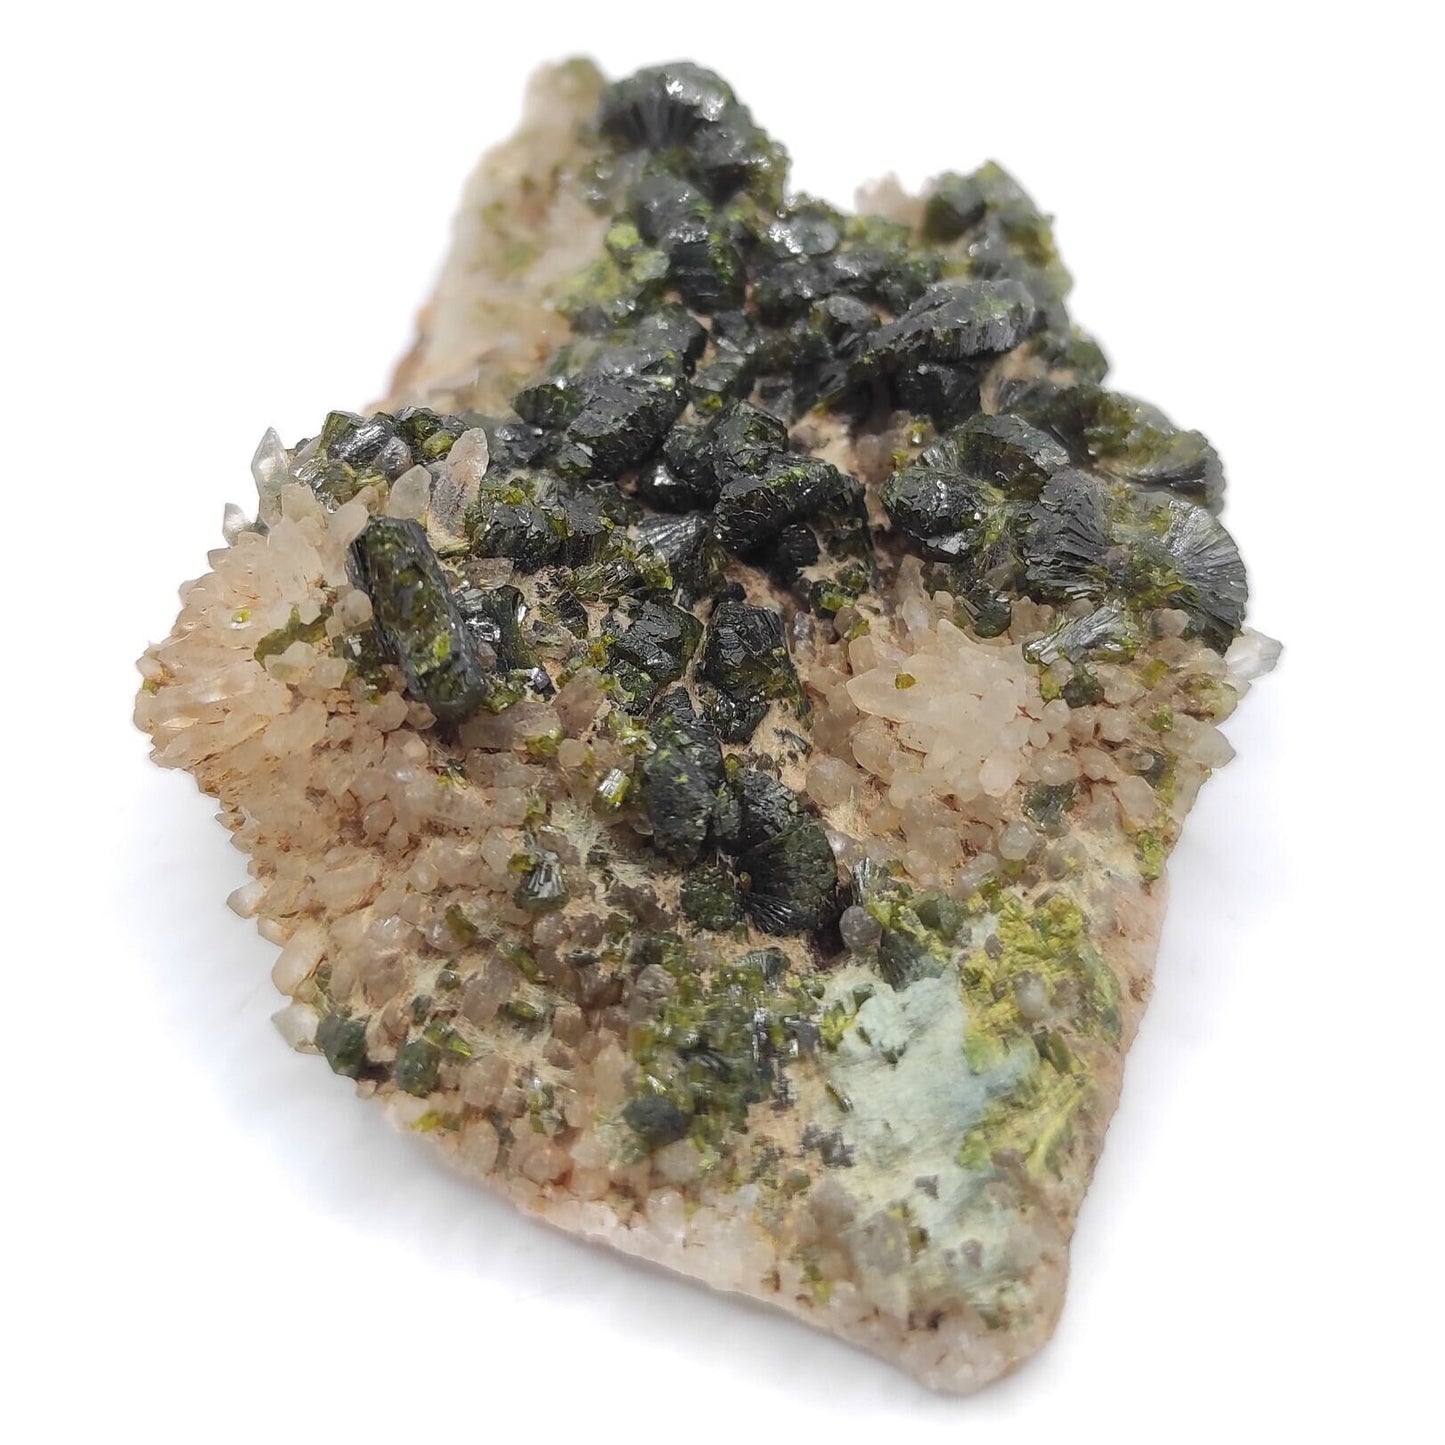 69g Epidote with Quartz - Imilchil, Morocco - Green Epidote Crystal Cluster - Raw Mineral Specimen - Green Epidote and Quartz Crystal